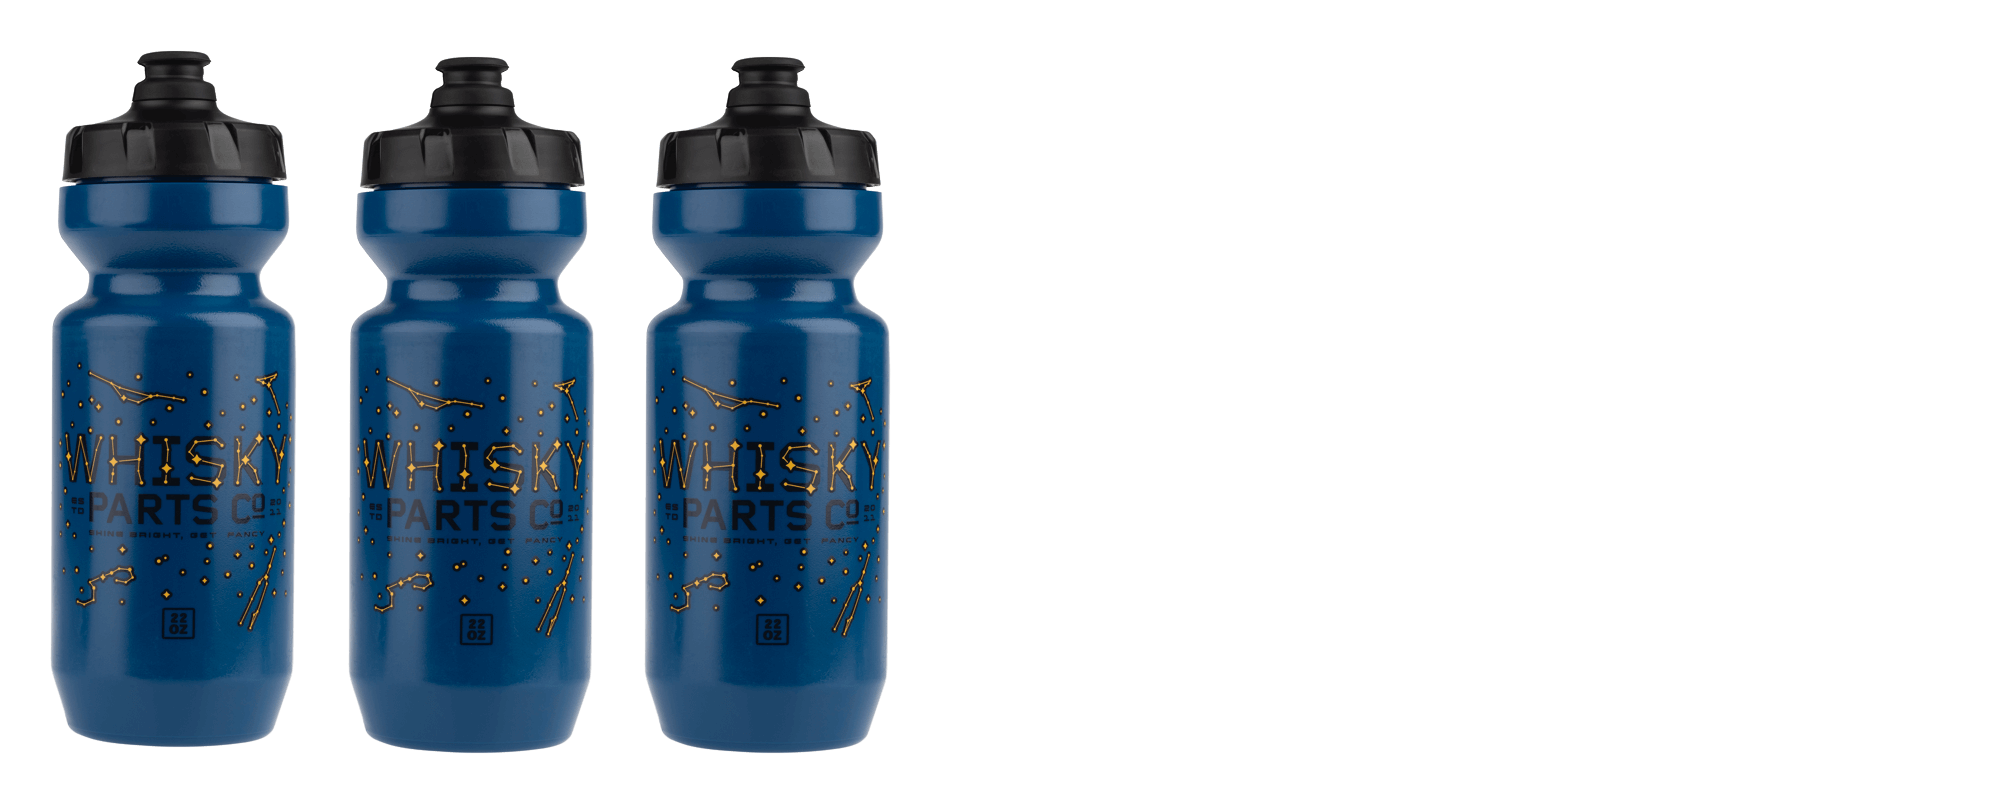 Whisky Stargazer Water Bottle - Deep Teal - three water bottles shown